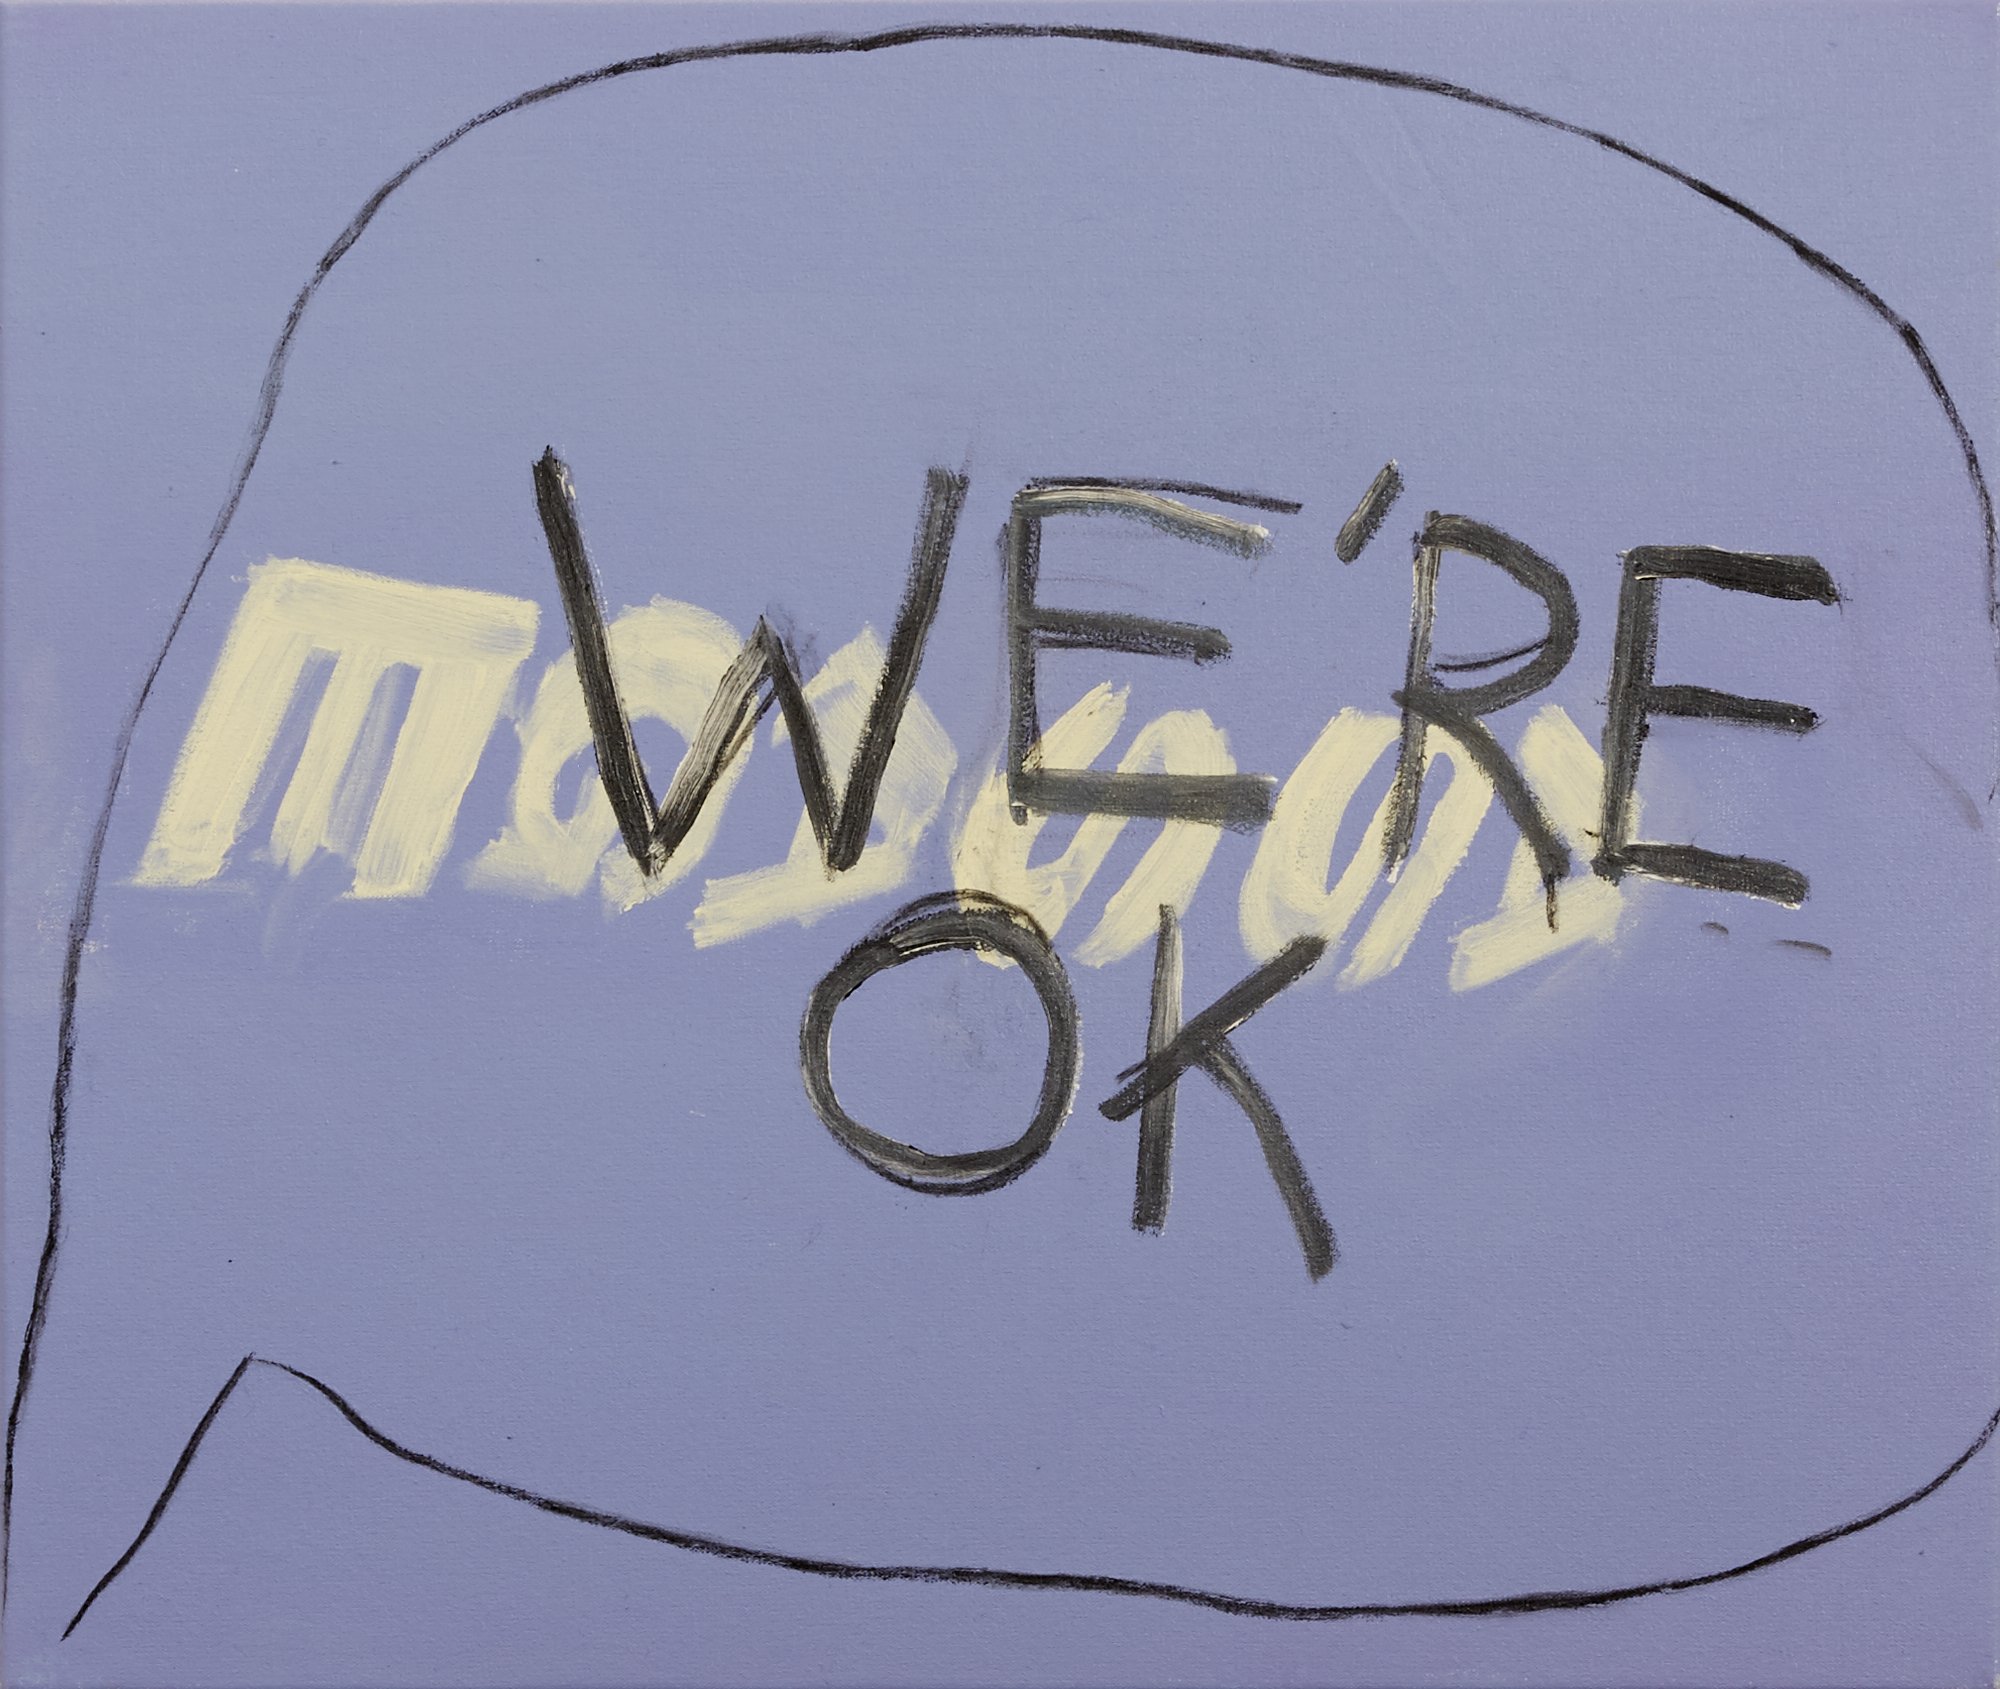   We’re Ok   Acrylic on canvas, 560 x 670mm, 2016 